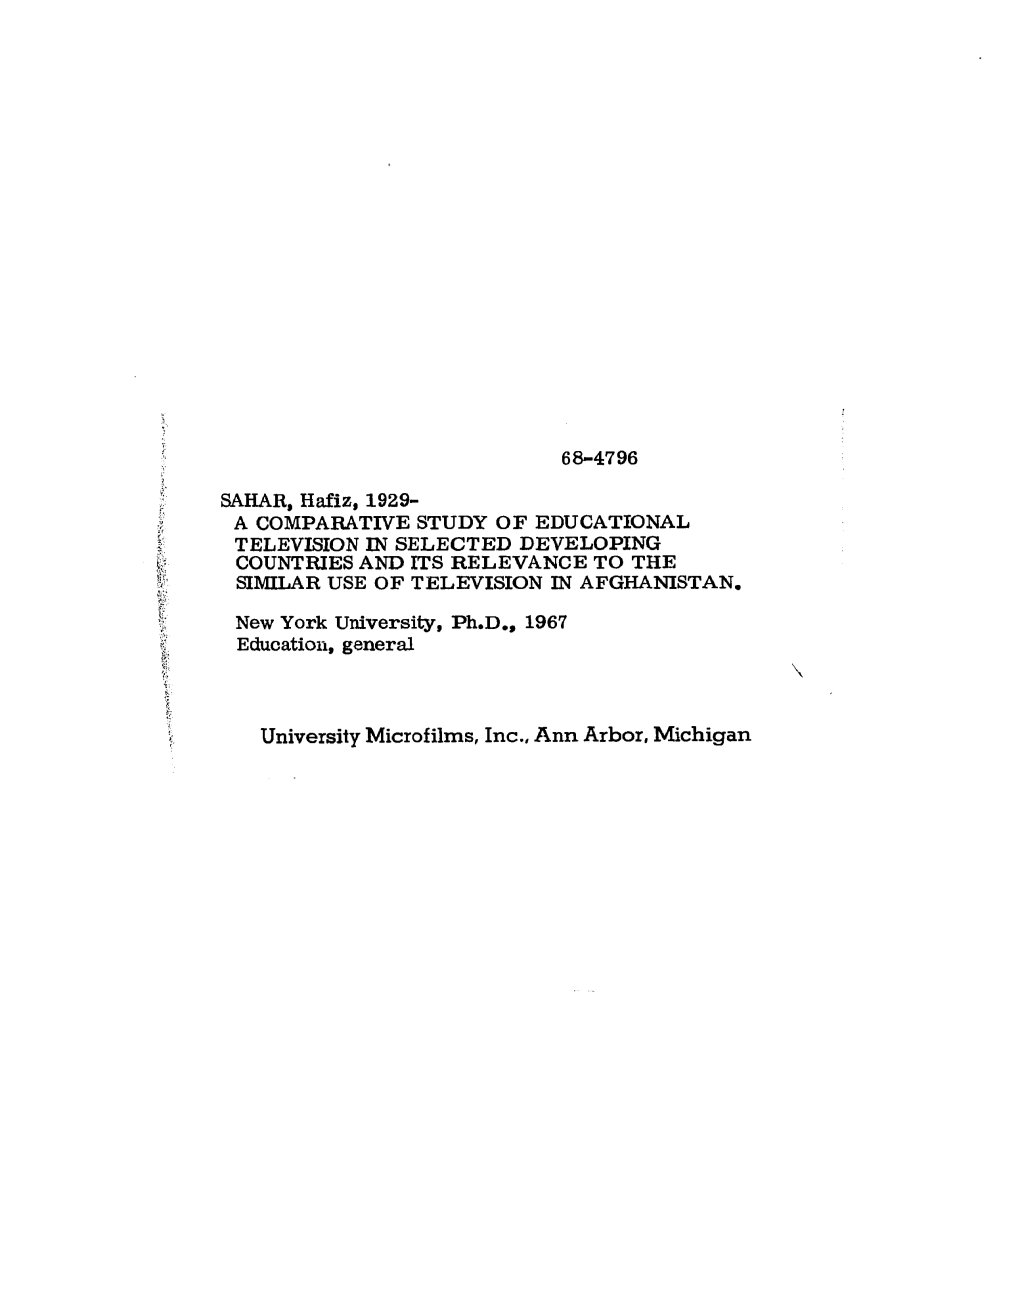 68-4796 University Microfilms, Inc., Ann Arbor, M Ichigan